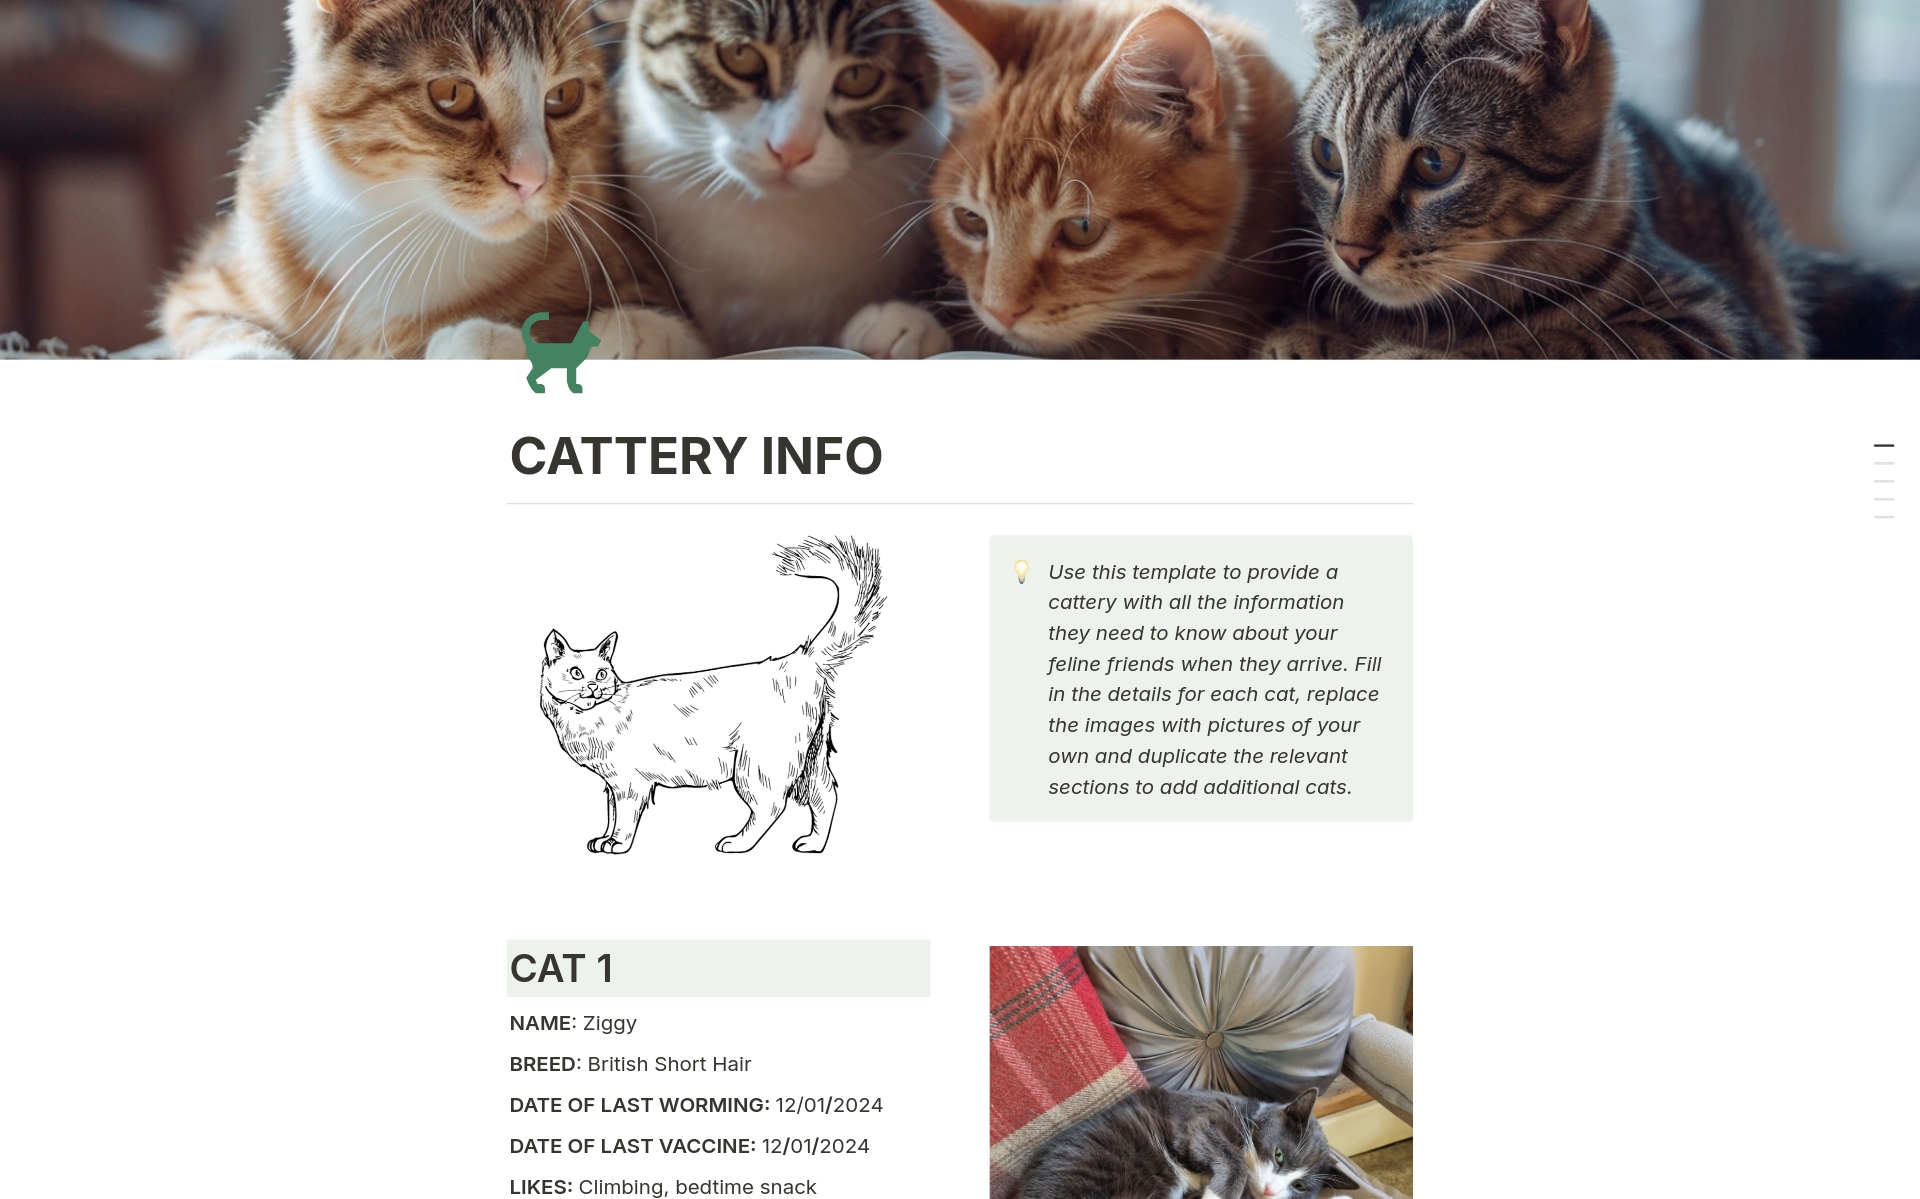 Aperçu du modèle de Cat info for cattery